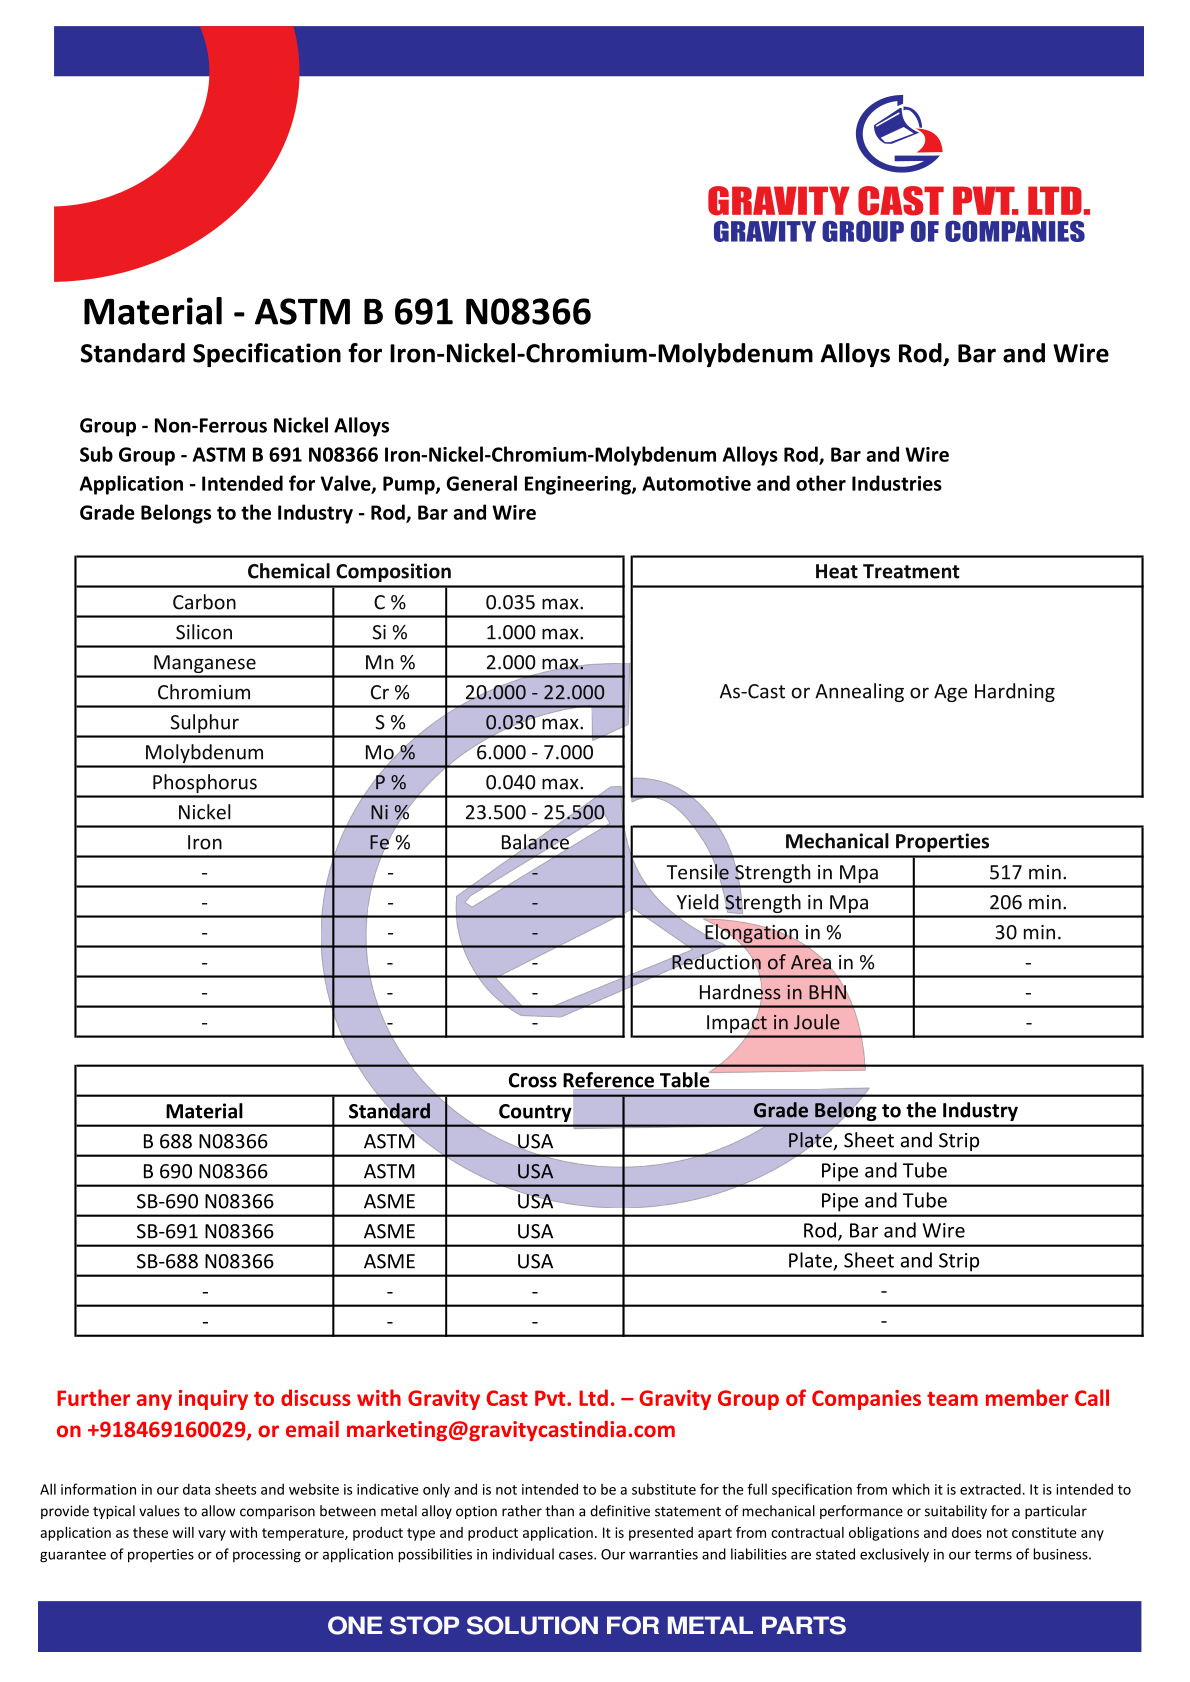 ASTM B 691 N08366.pdf